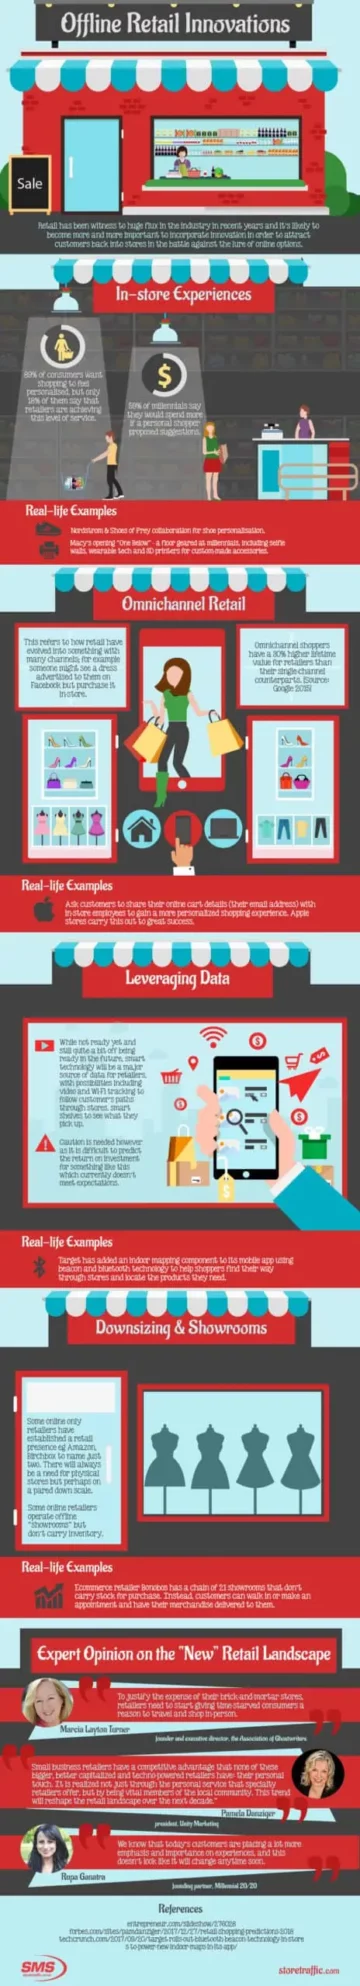 Inovații în retail offline! (Infografic) - Supply Chain Game Changer™